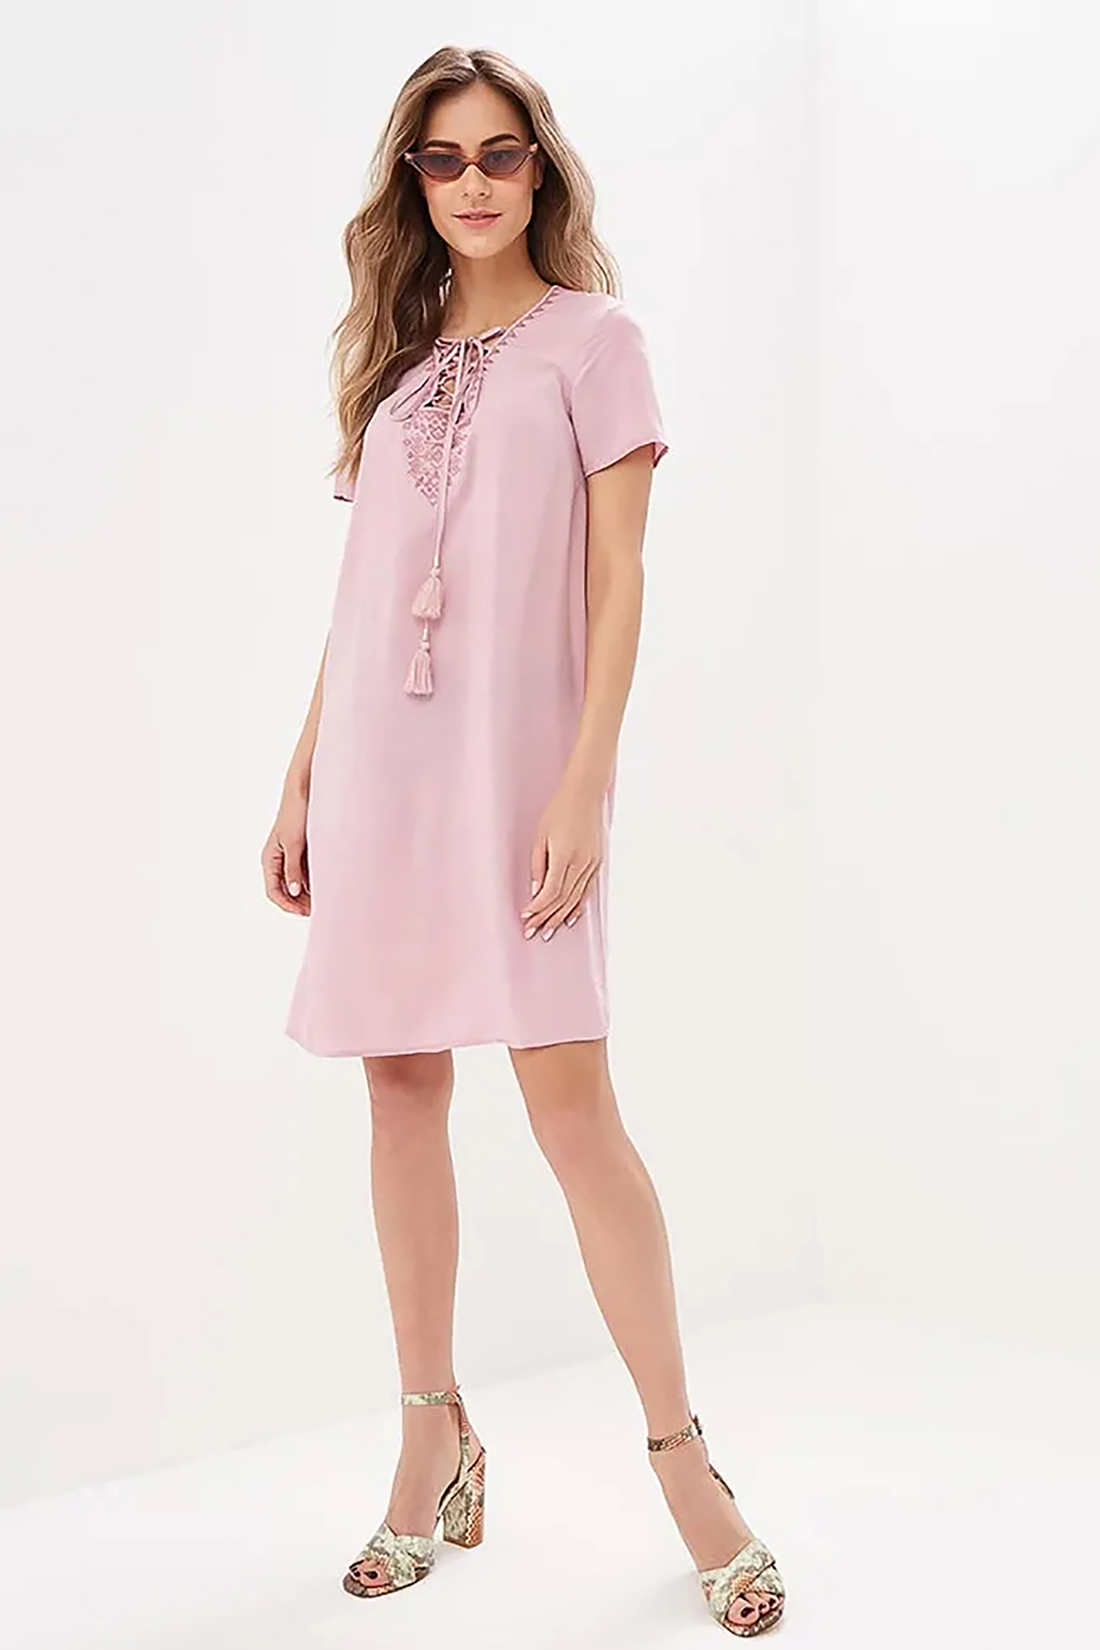 Платье со шнуровкой (арт. baon B459035), размер XS, цвет розовый Платье со шнуровкой (арт. baon B459035) - фото 1